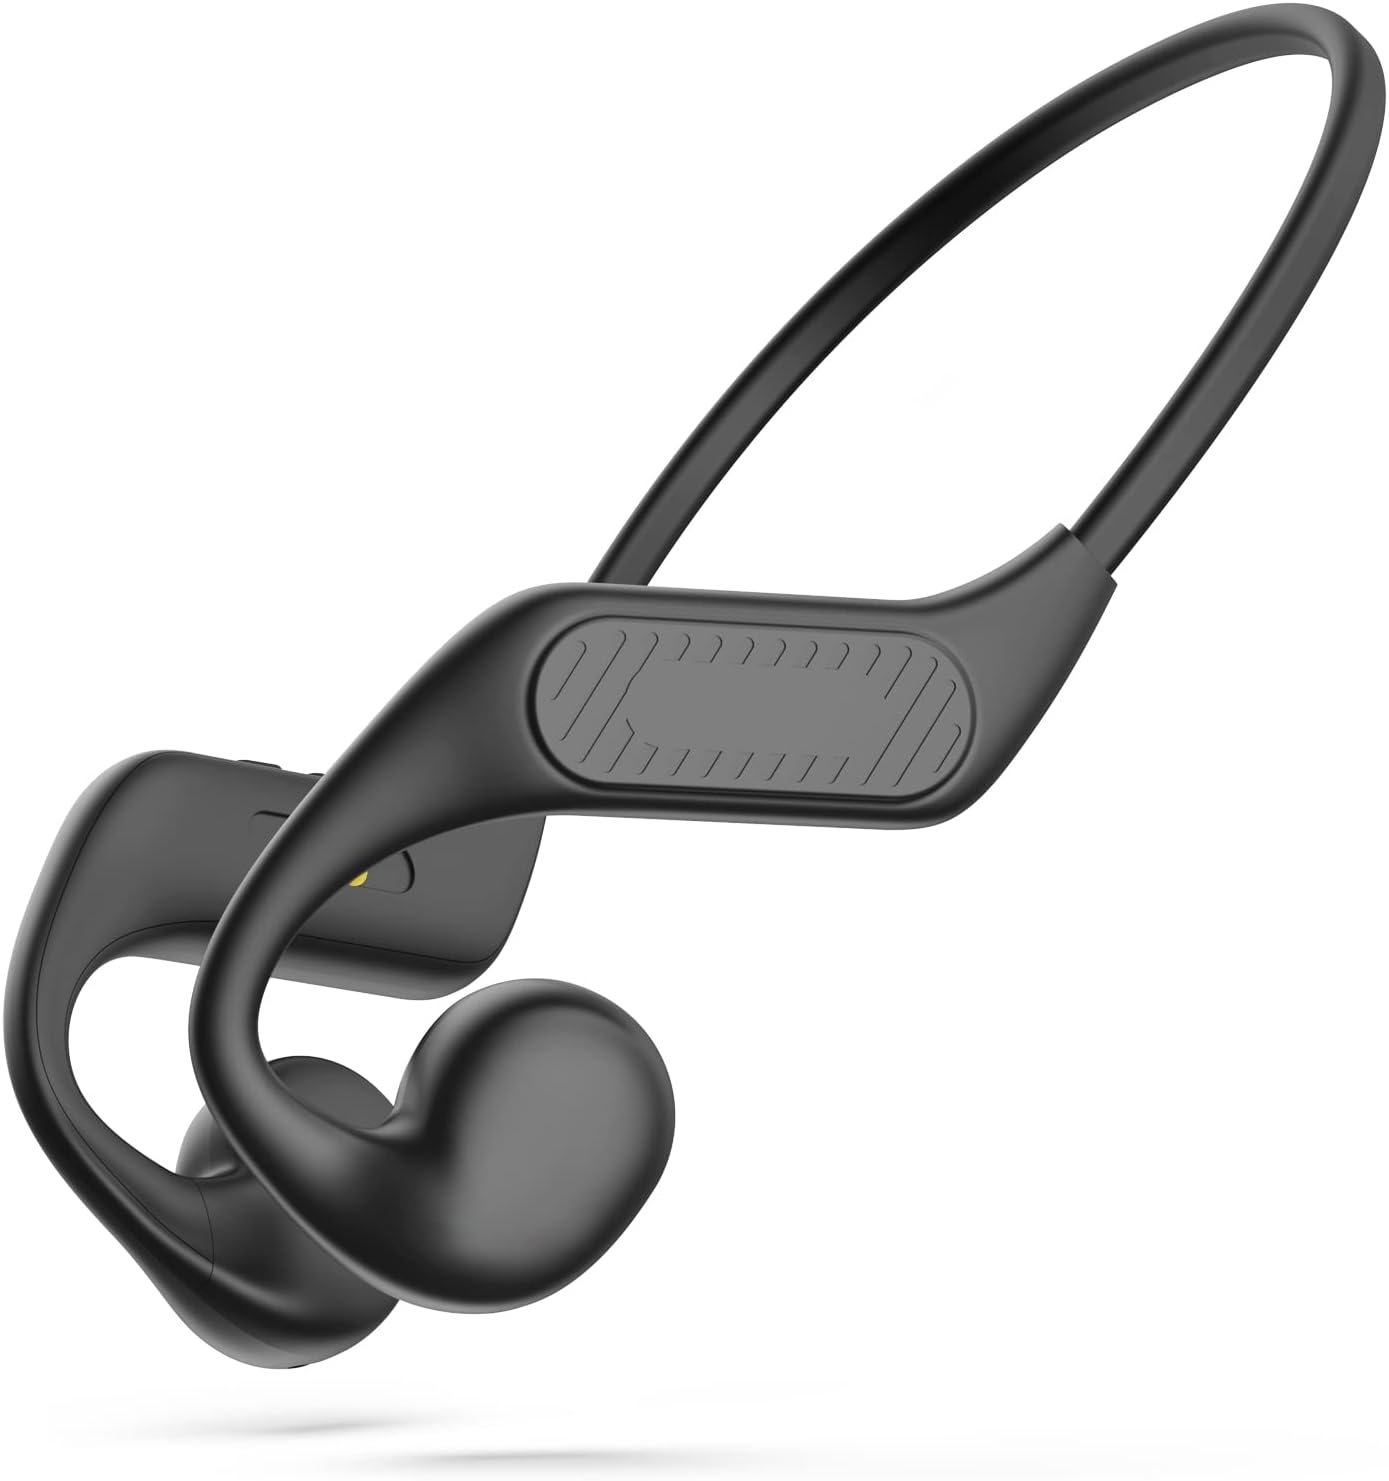 【Bluetooth 耳掛け式 骨伝導イヤホン】マグネット充電 マイク付き 携帯 オープンイヤー ワイヤレス 非 骨伝導 無線 耳かけ式 ぶるーとぅーす ノイズキャンセリング 搭載 両耳 2台同時接続 IPX6防水 軽量23g 日本語説明書付き